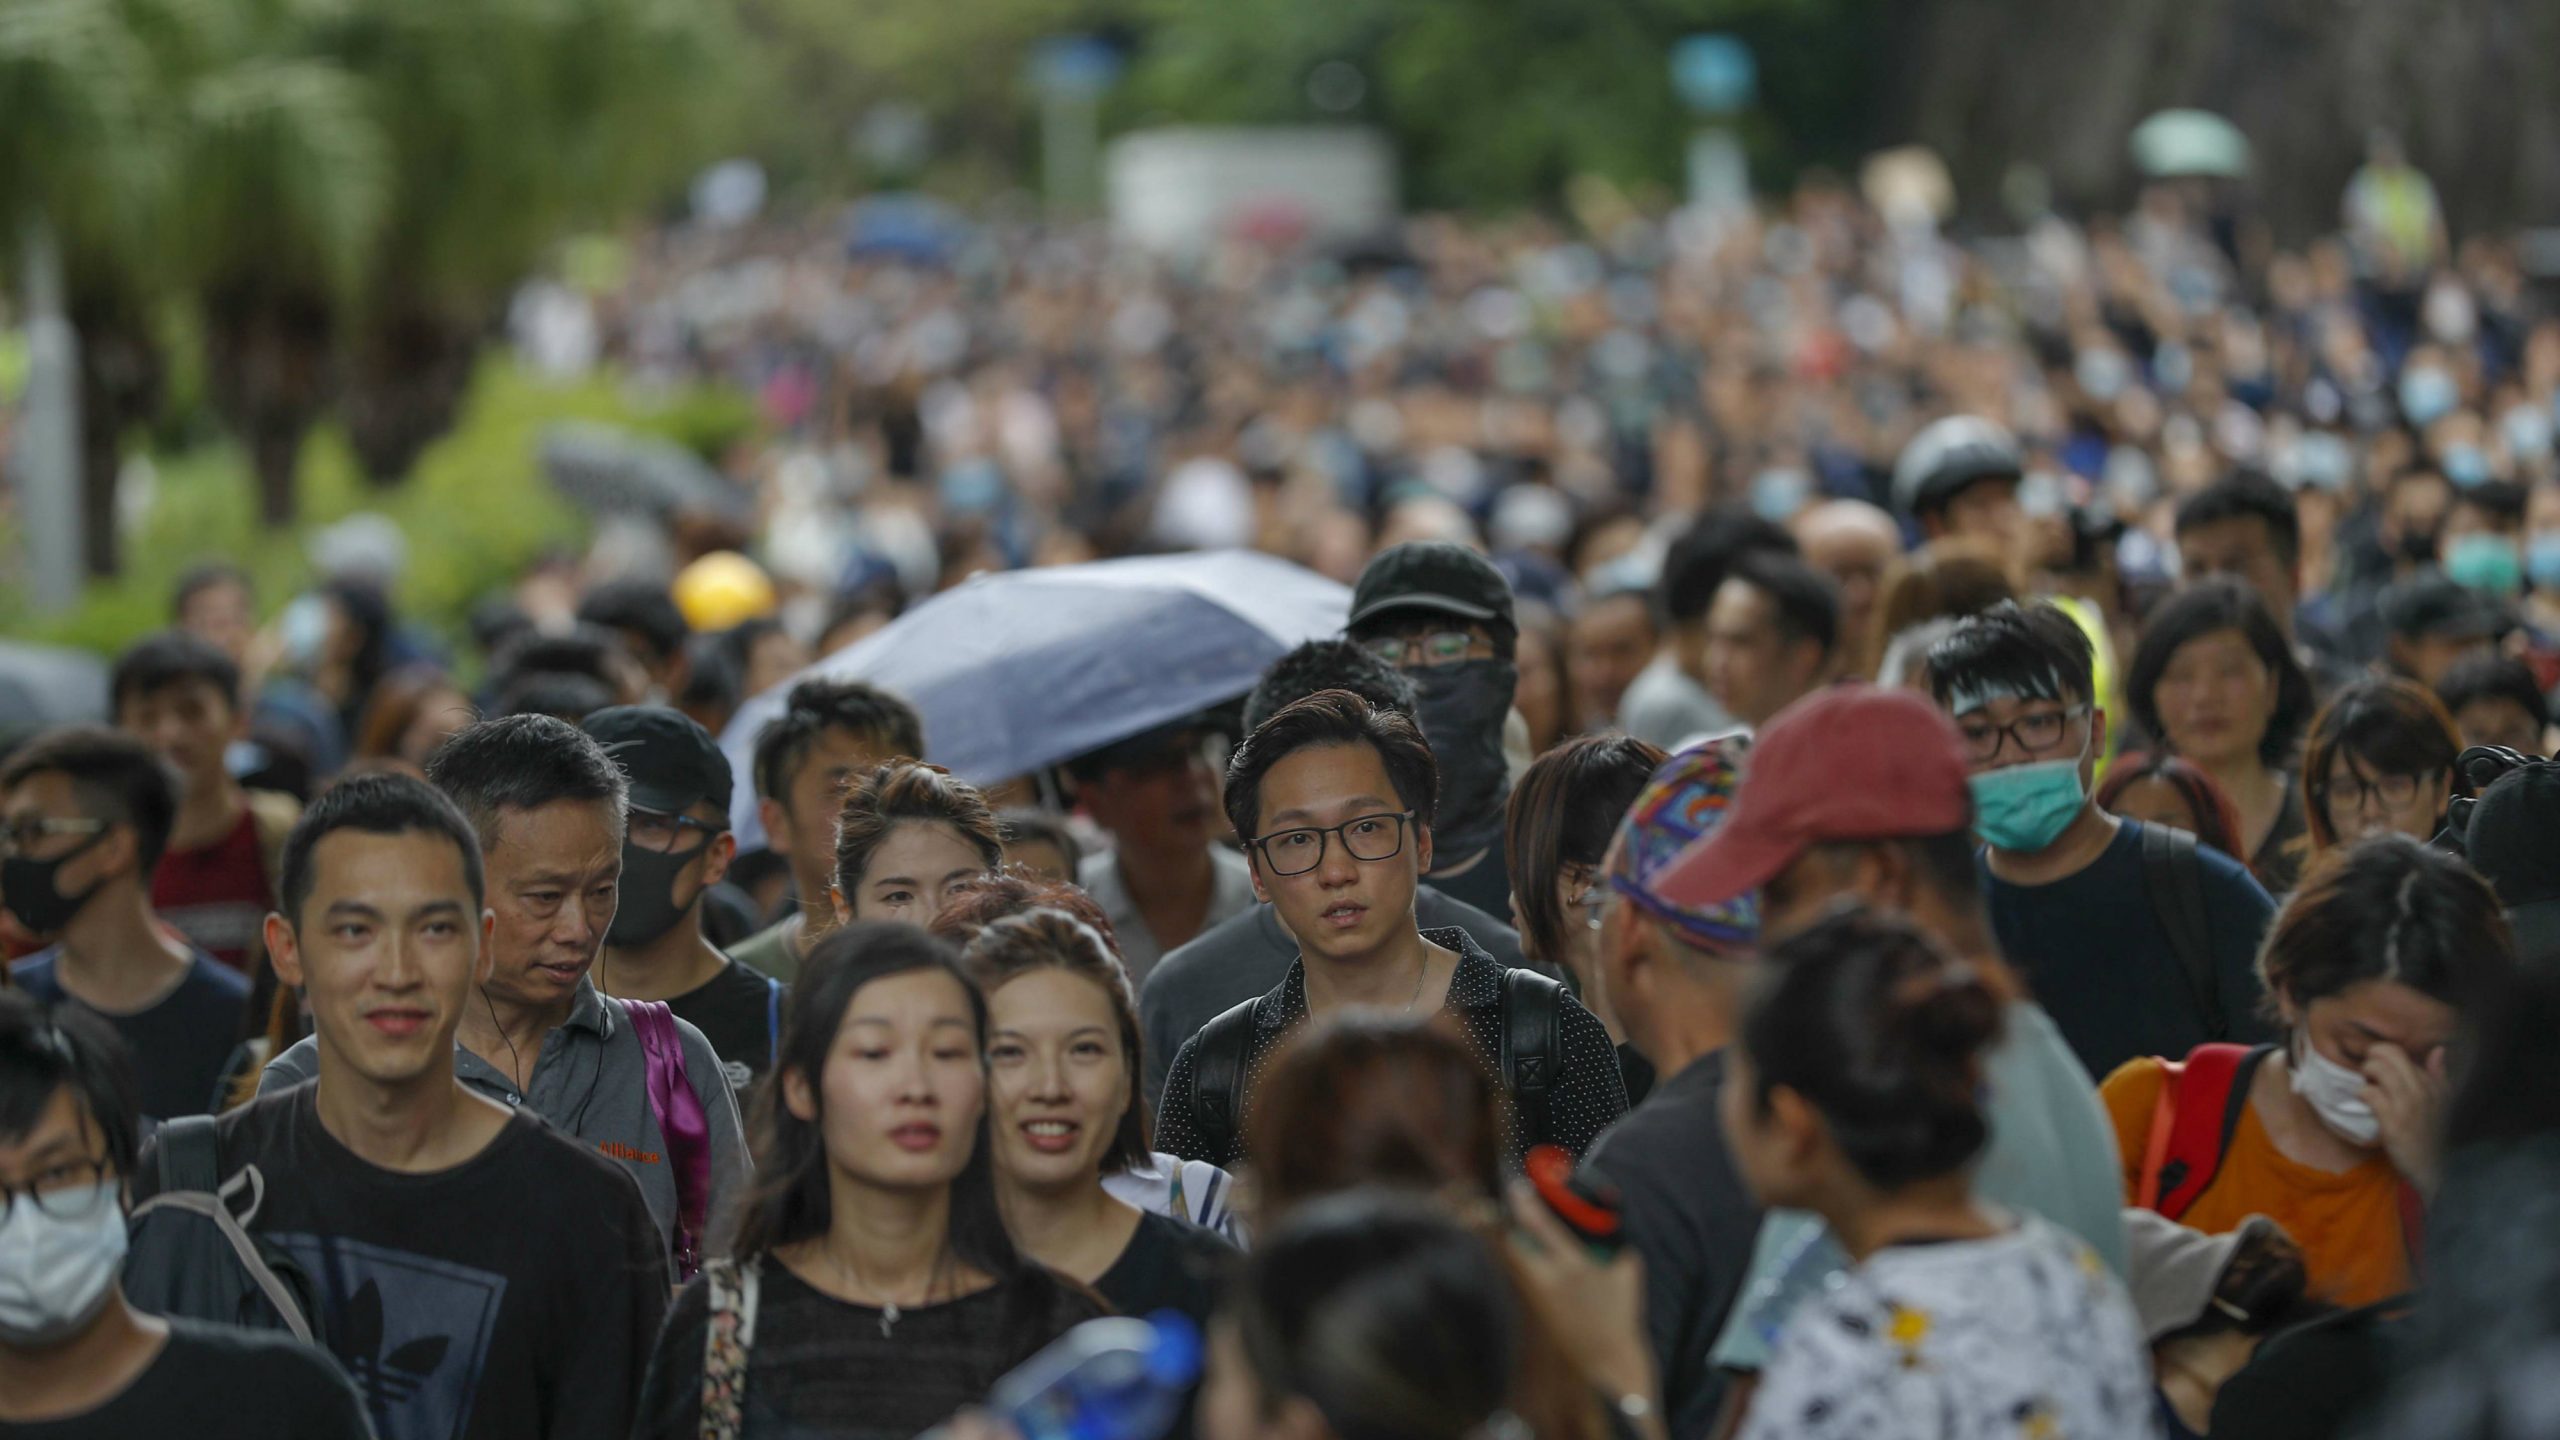 Premijerka Hongkonga započela pregovore sa demonstrantima, ali ne prihvata zahteve 1